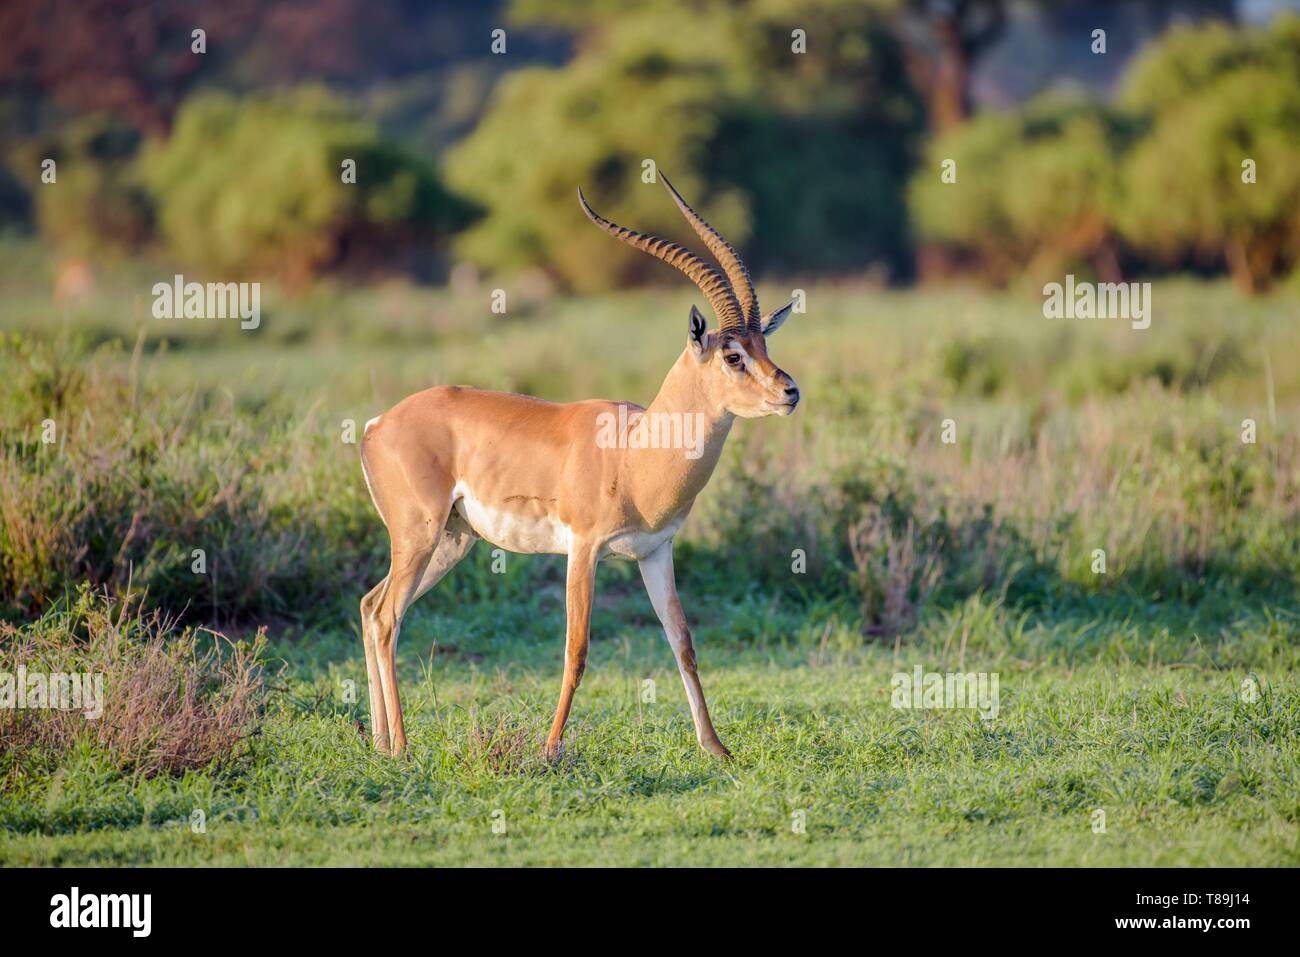 Kenya, Kajialo County, Amboseli National Park, Grant's gazelle Stock Photo